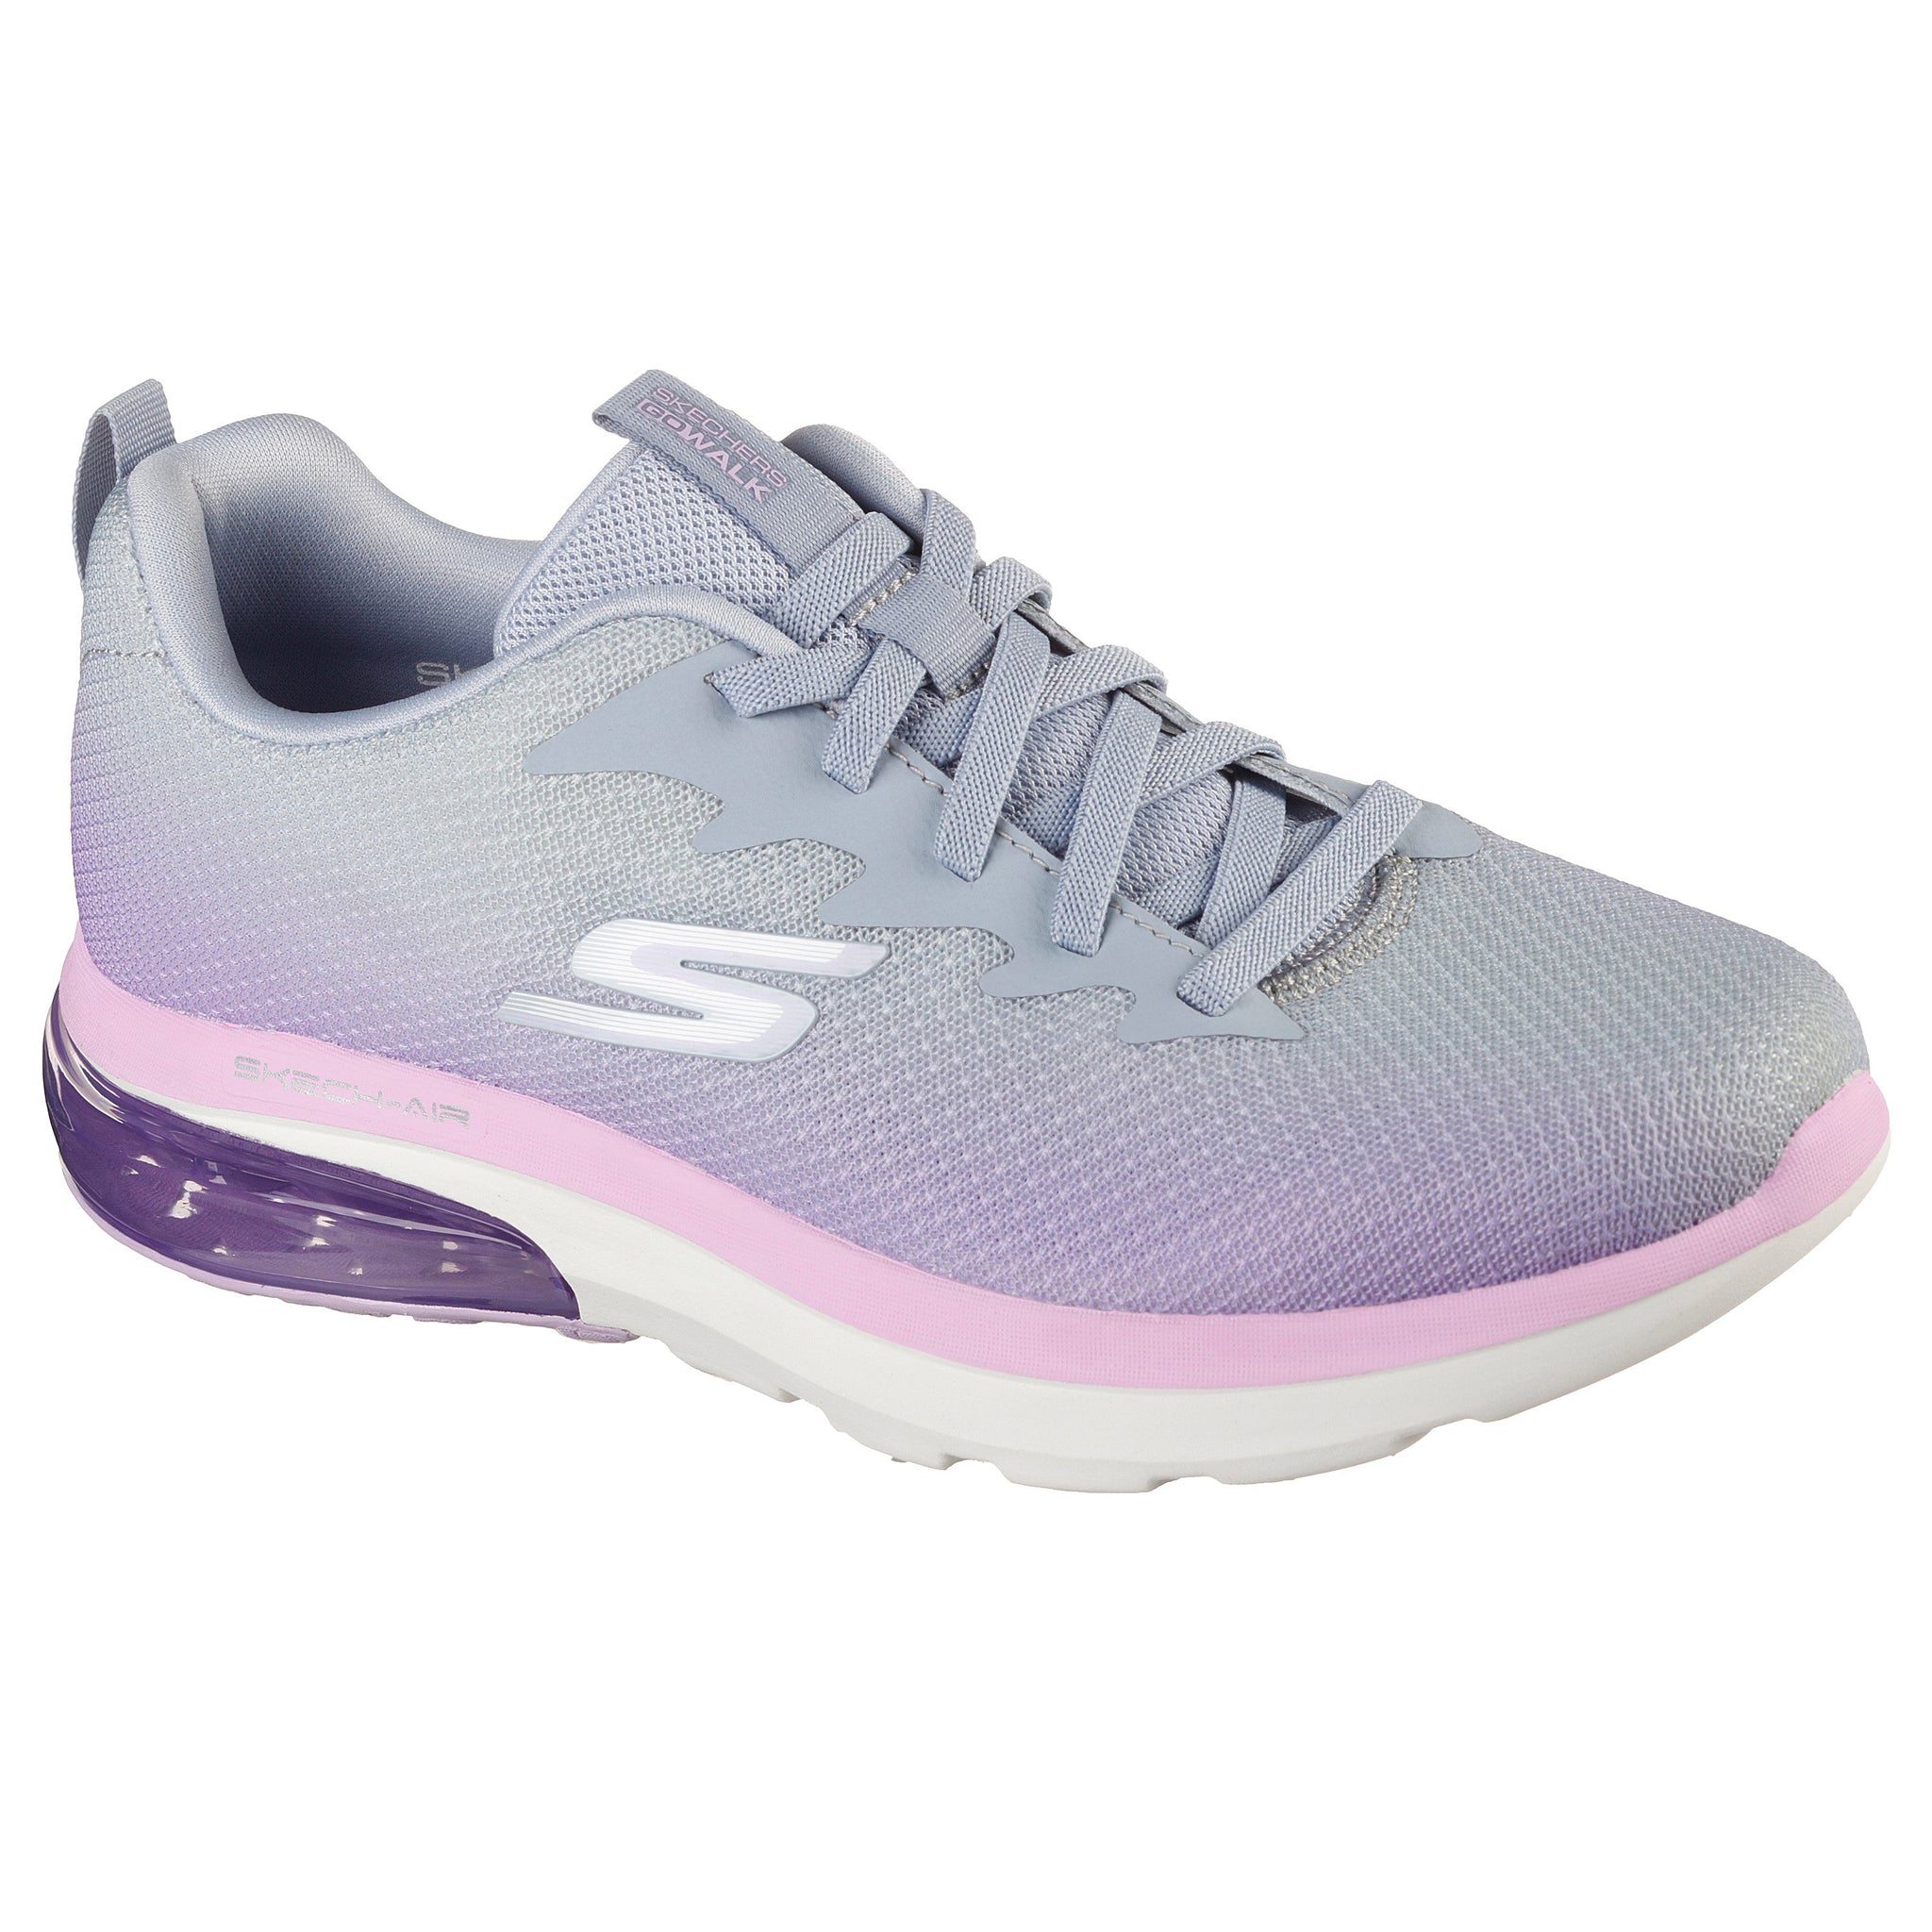 Women's 124348 GOwalk Air Breeze Gray/Lavender Athl – That Shoe Store More